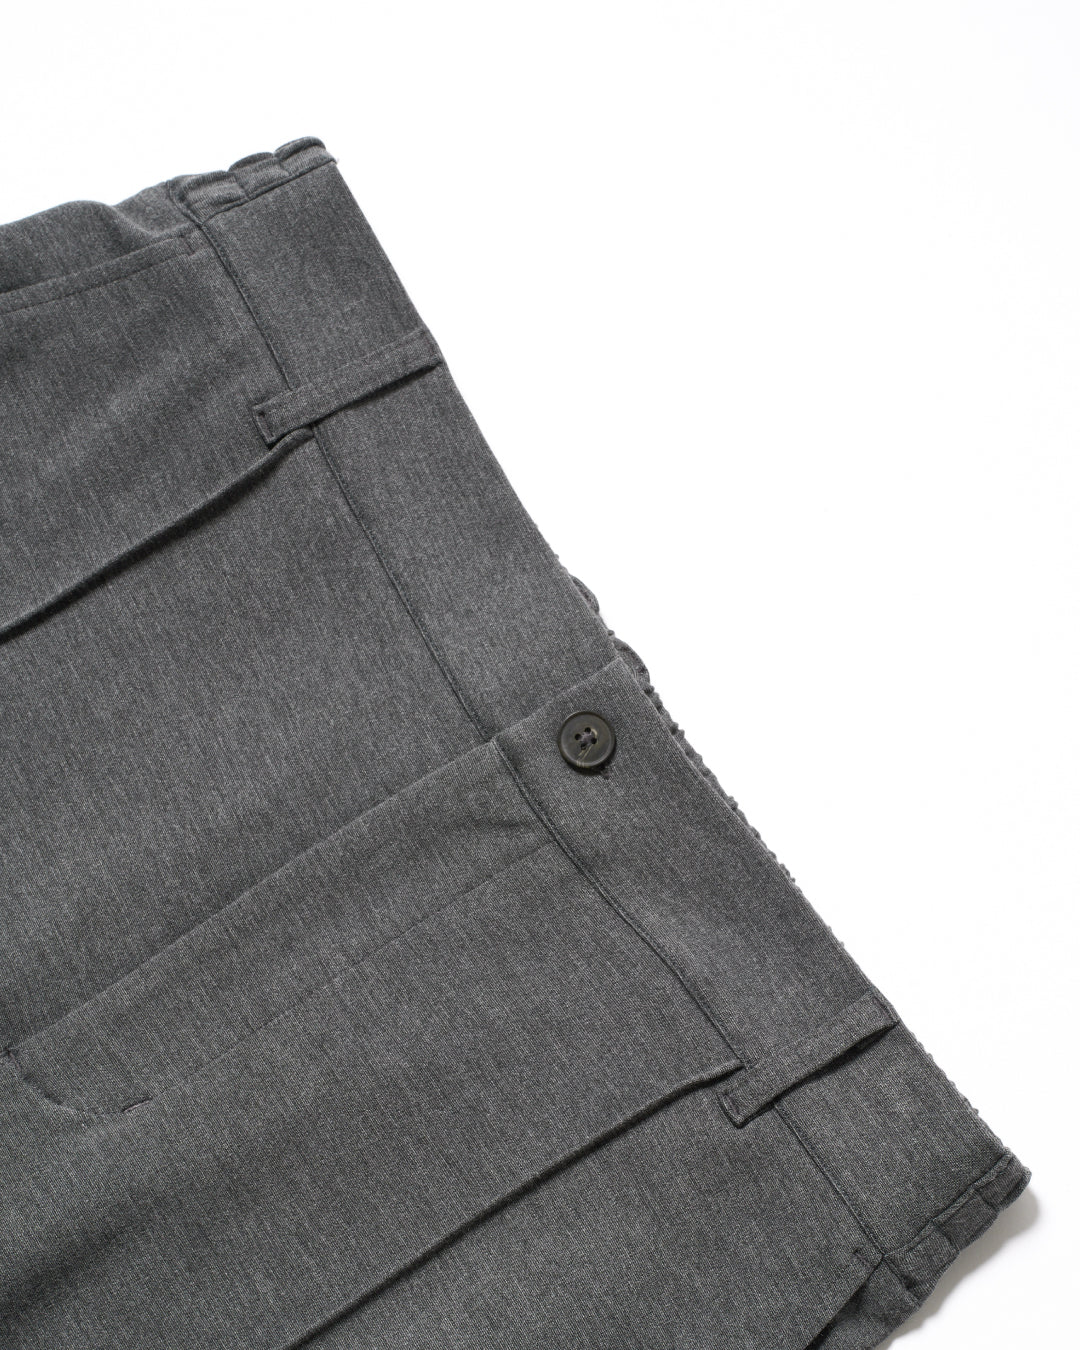 Black Suit Trousers for Men Stretch Slim Fit Cropped Pants Gray Skinny Smart  Casual Capri Pants